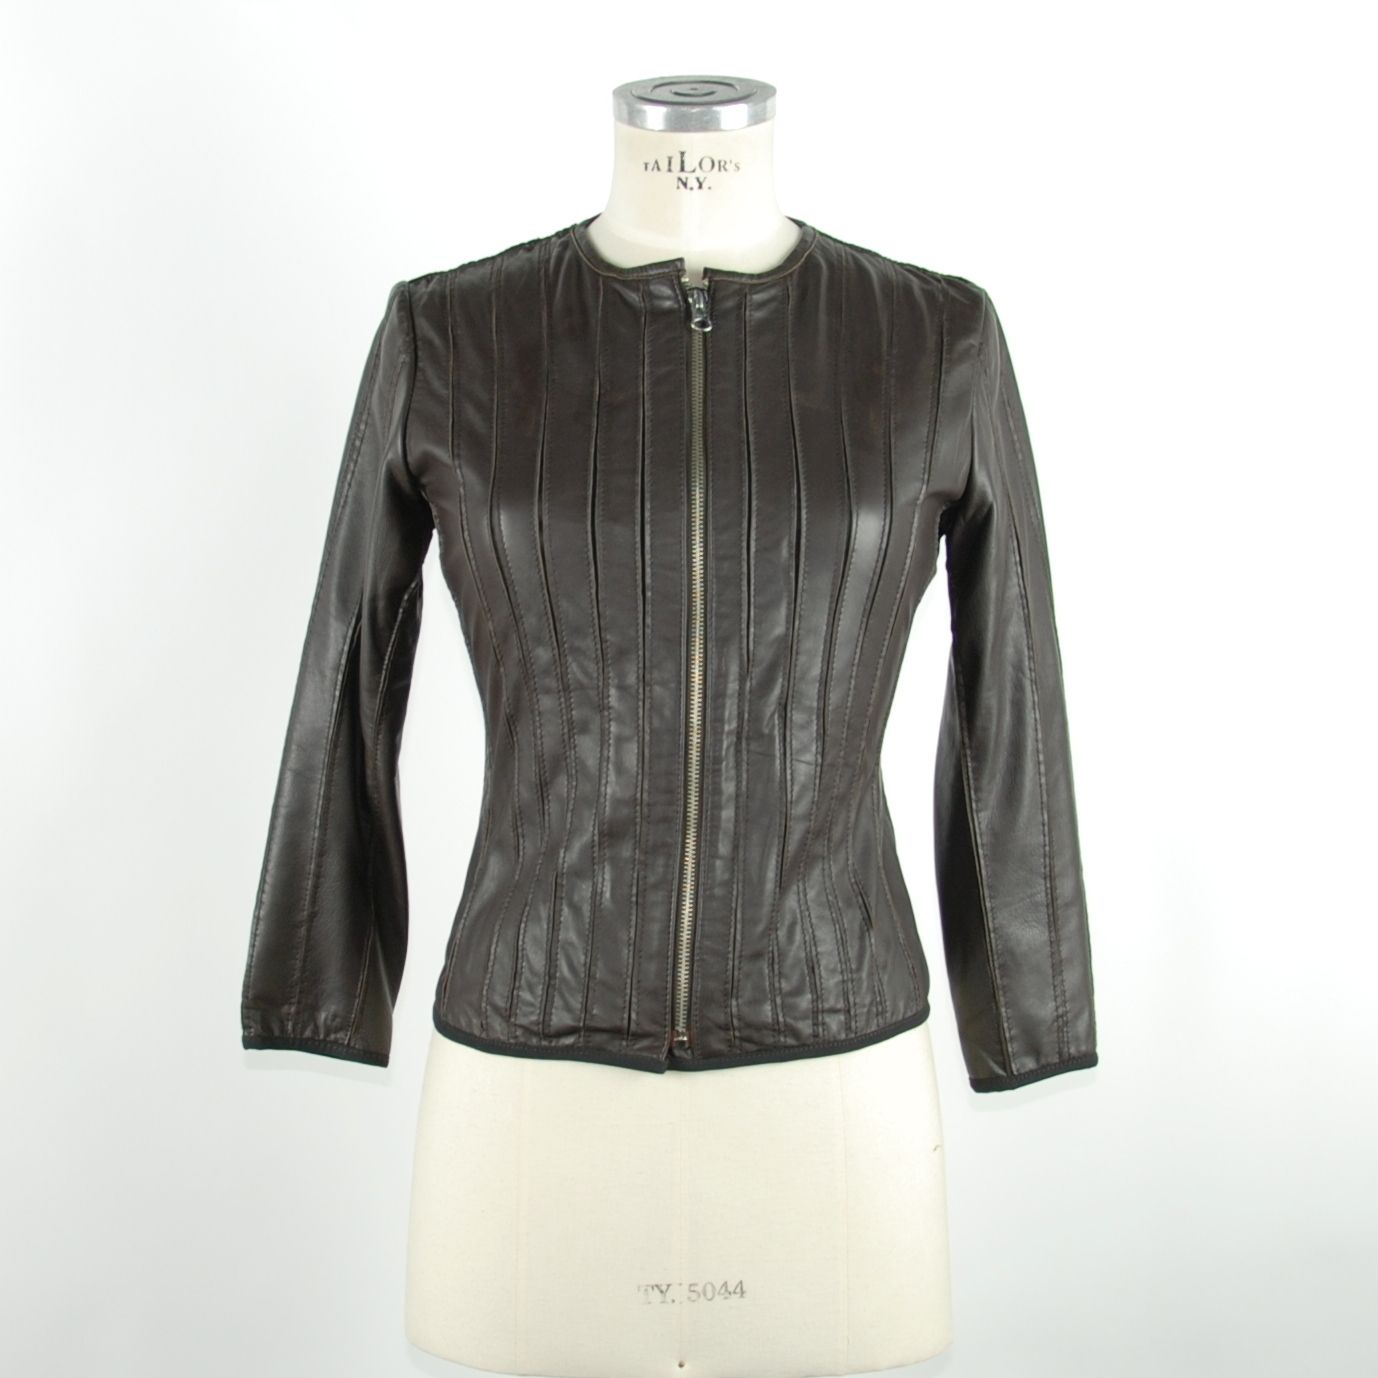 Sleek Black Leather Jacket for Elegant Evenings